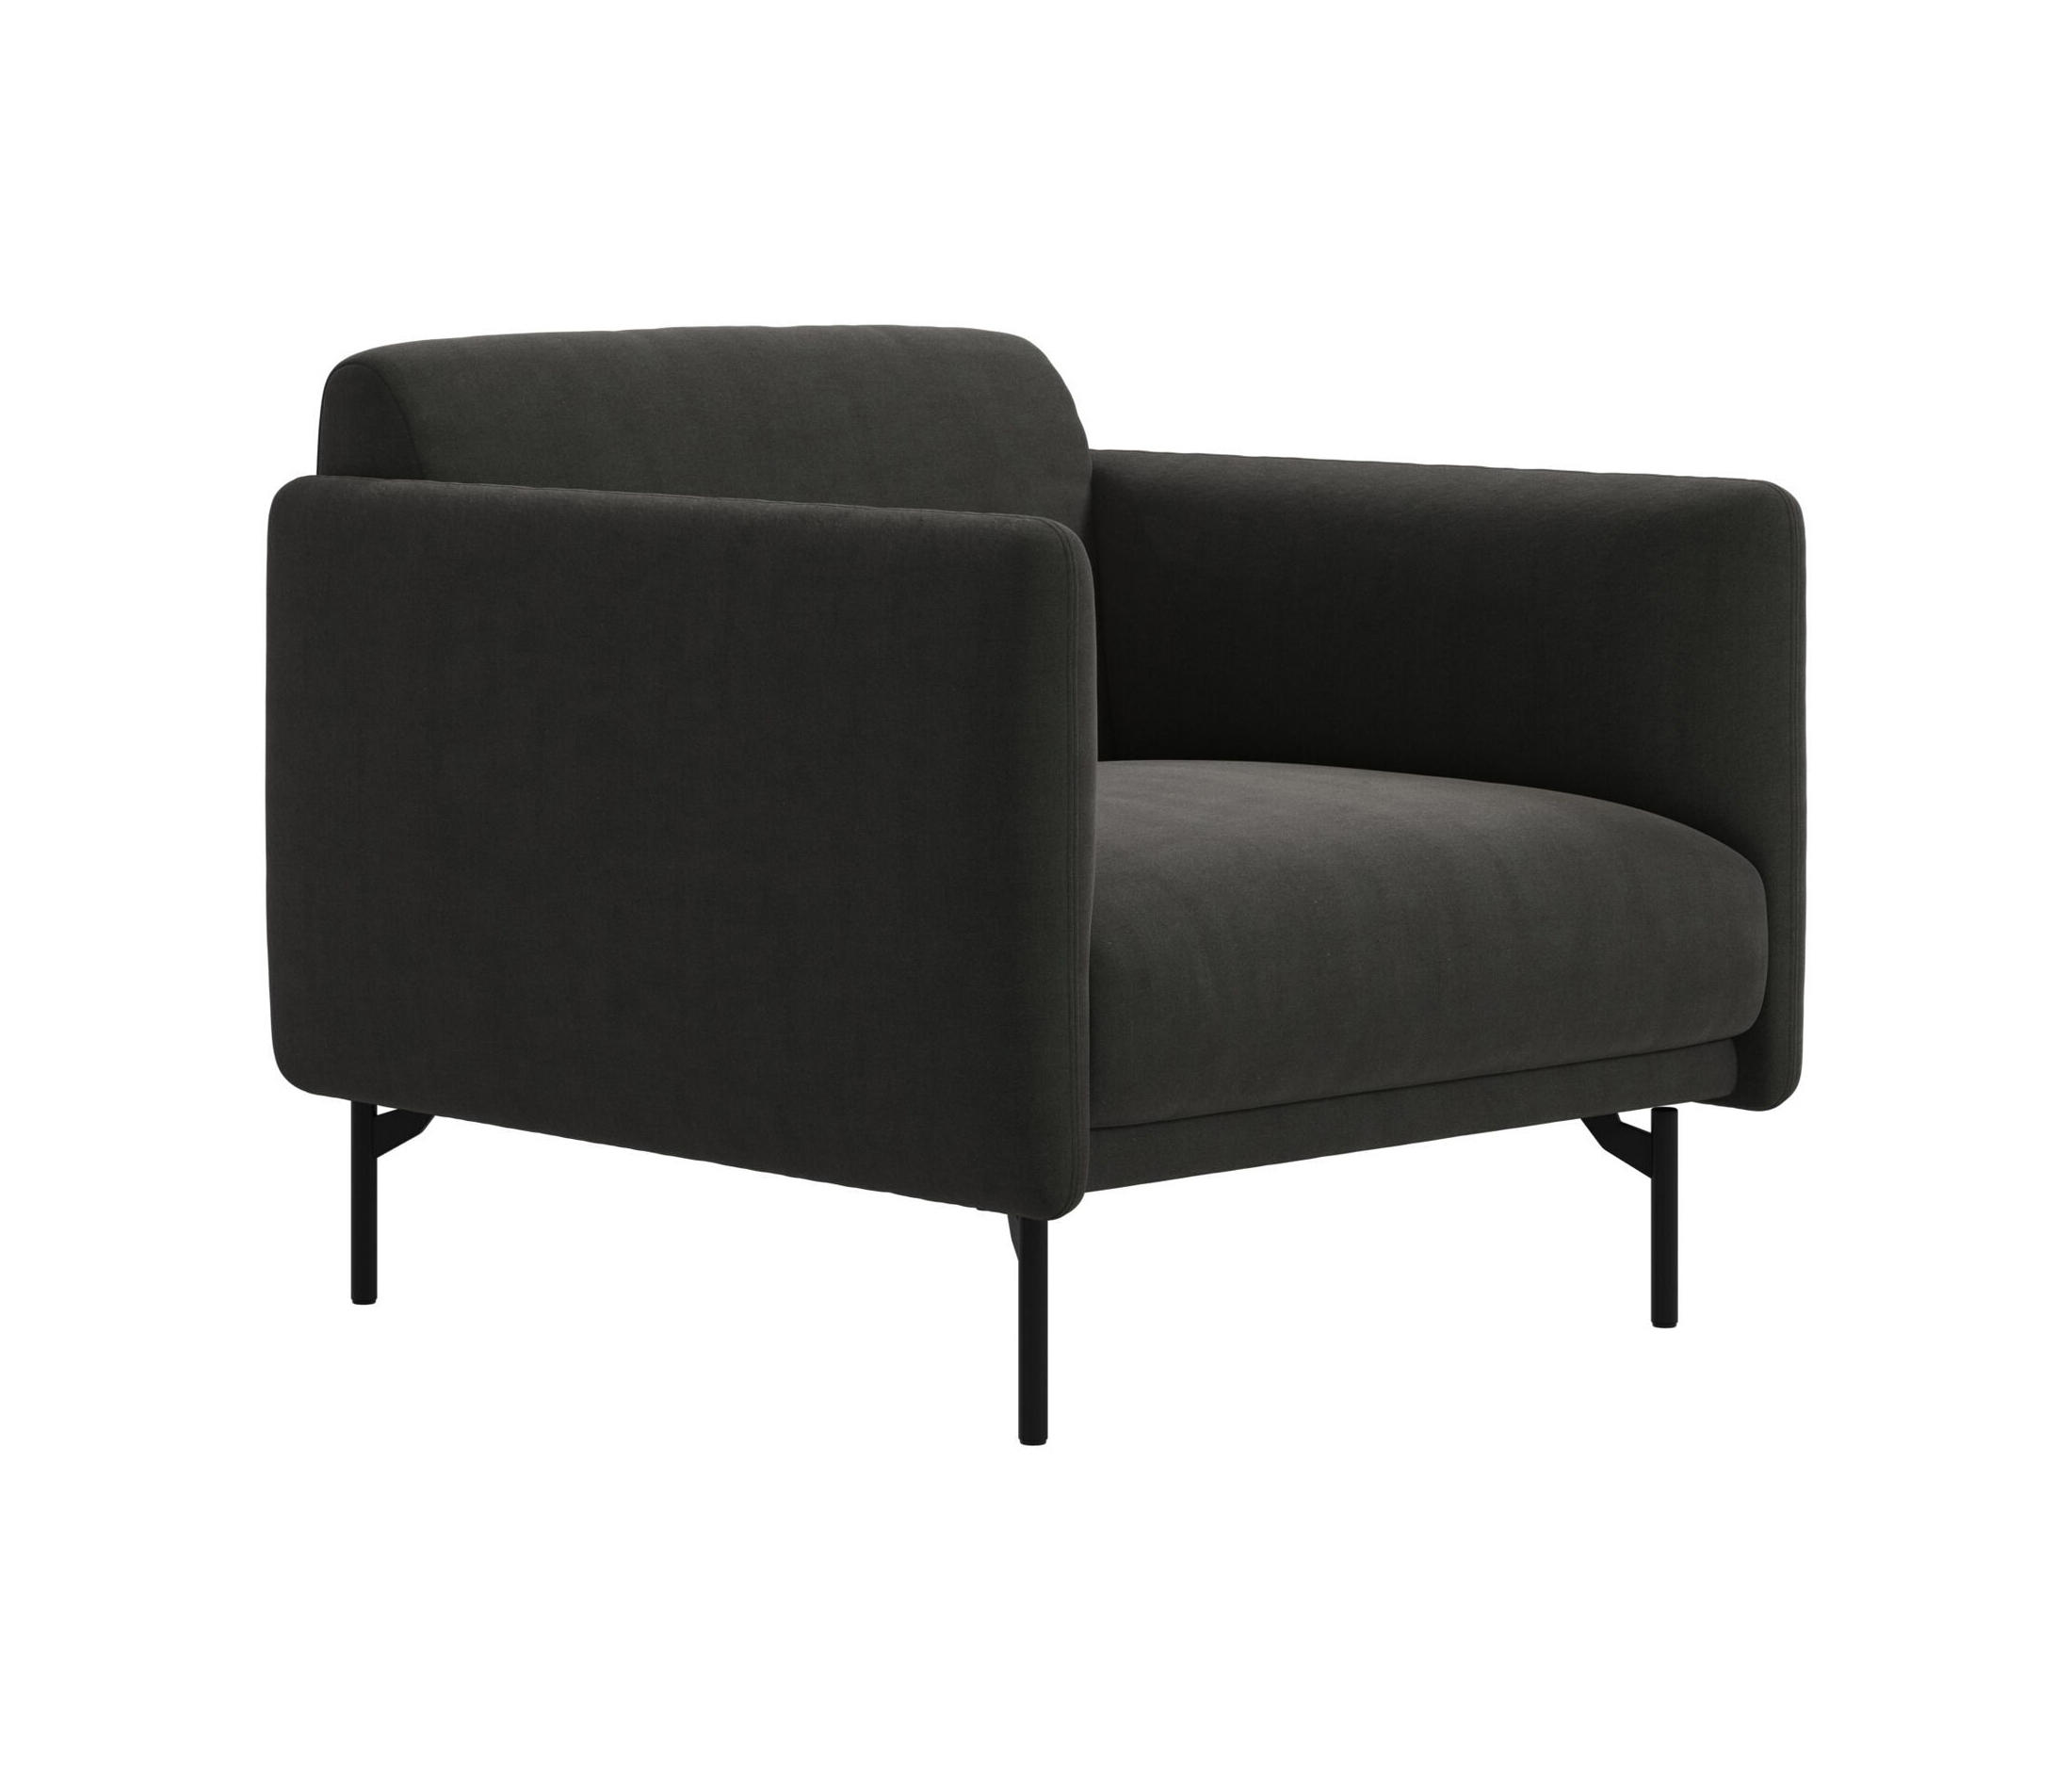 Berne armchair 1001 & designer furniture | Architonic